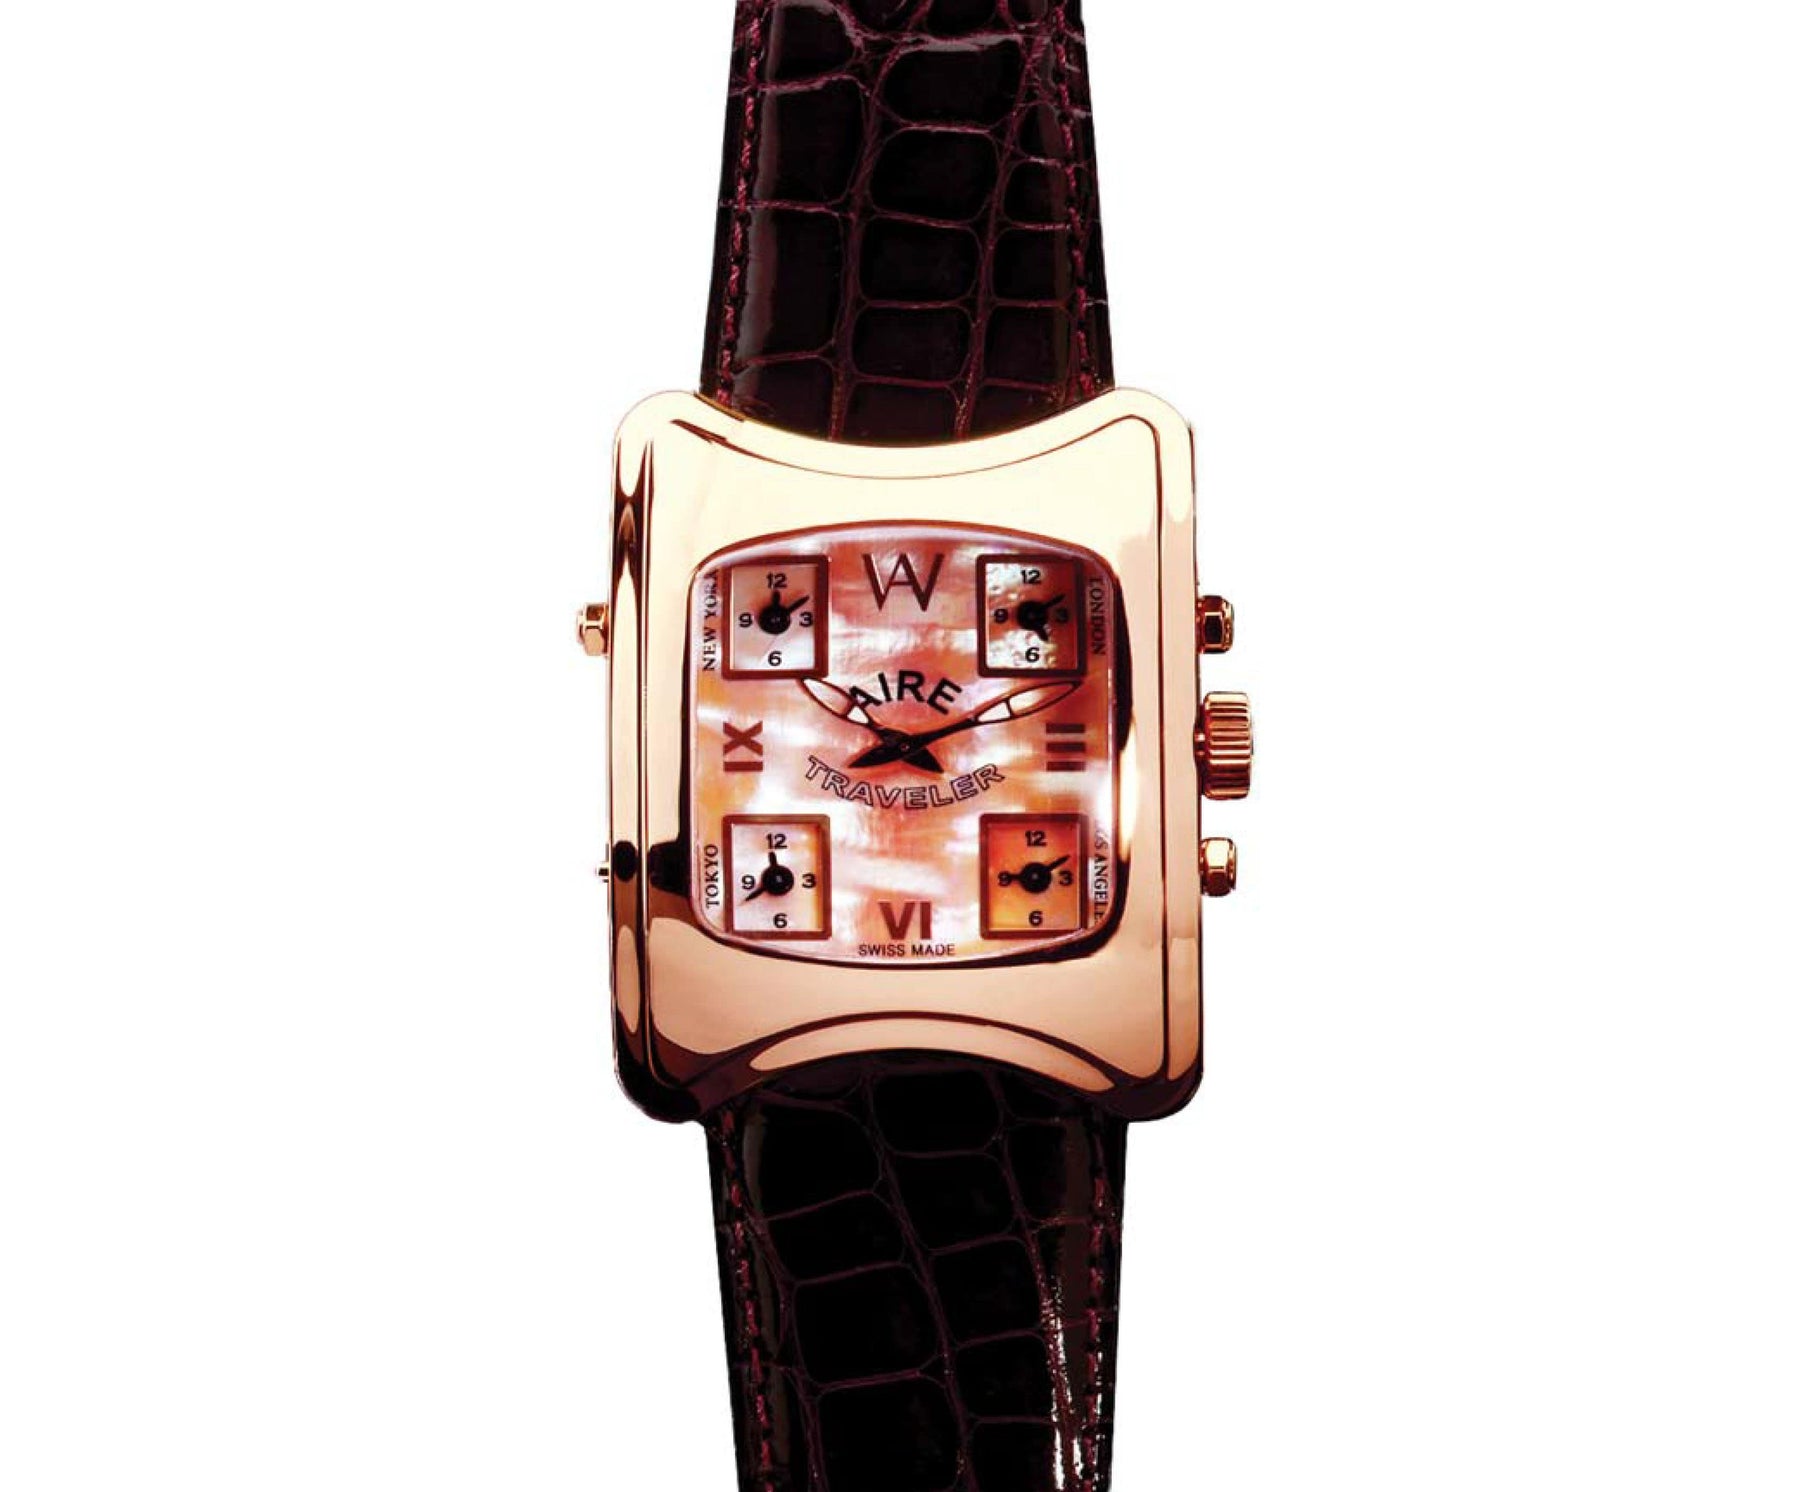 Watch - Aire Traveler 5 Time Zone Swiss Made 18-Karat Gold  Watch For Men